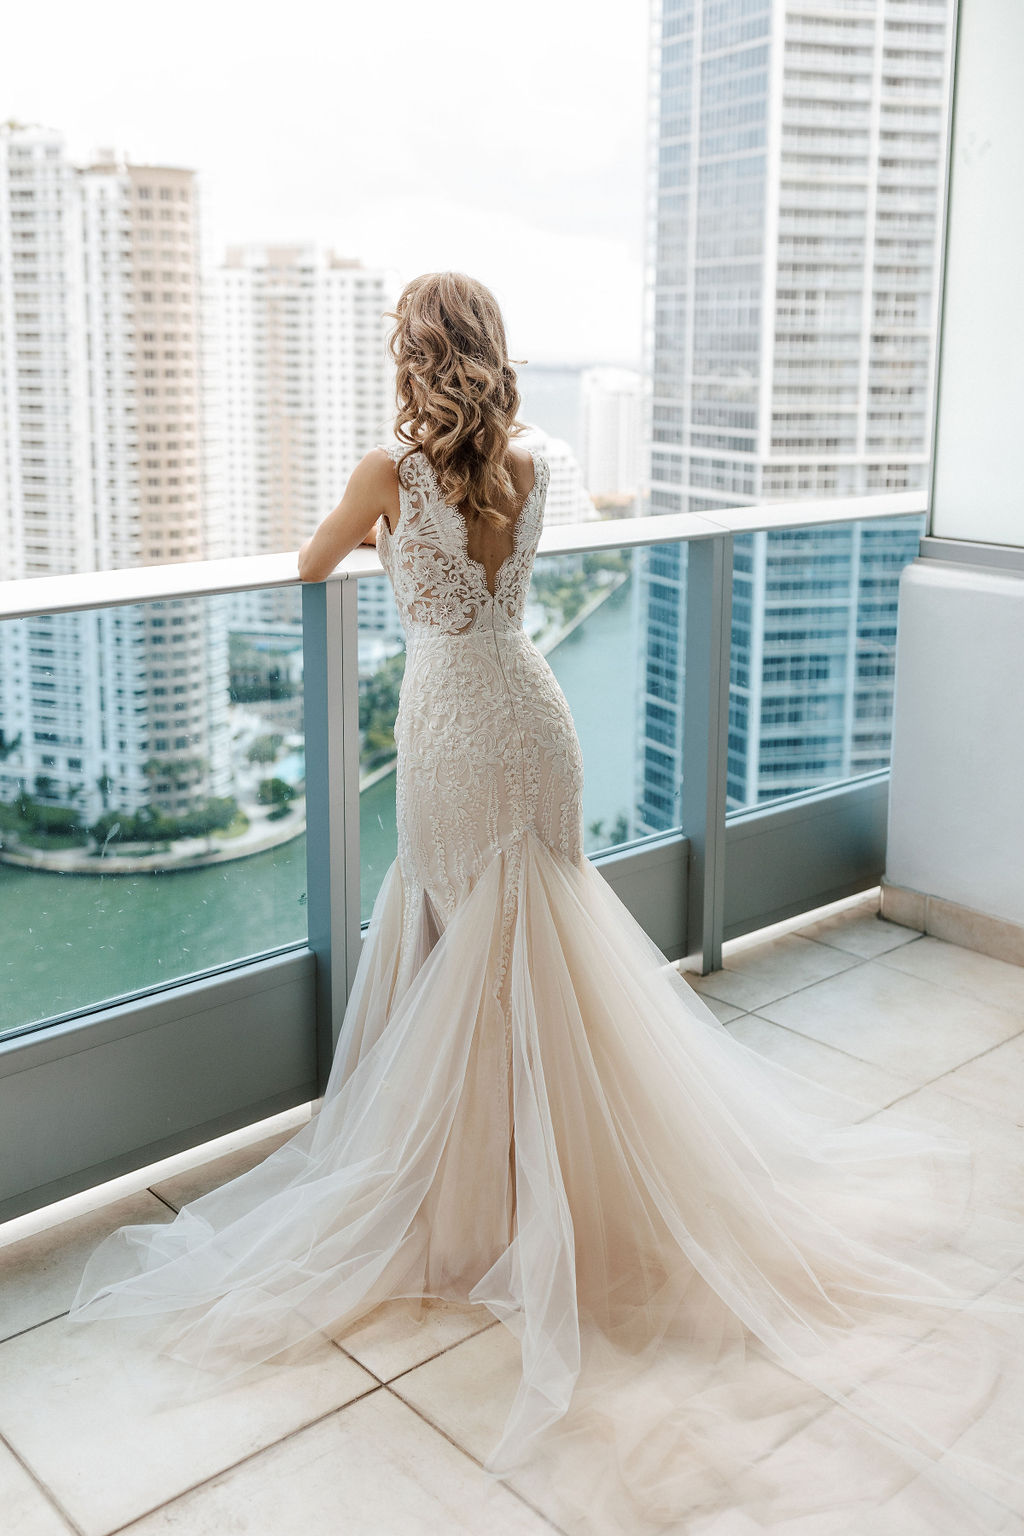 Penthouse Riverside Wharf Wedding, Miami Wedding Photographer, Rooftop Wedding Miami, Erika Tuesta Photography